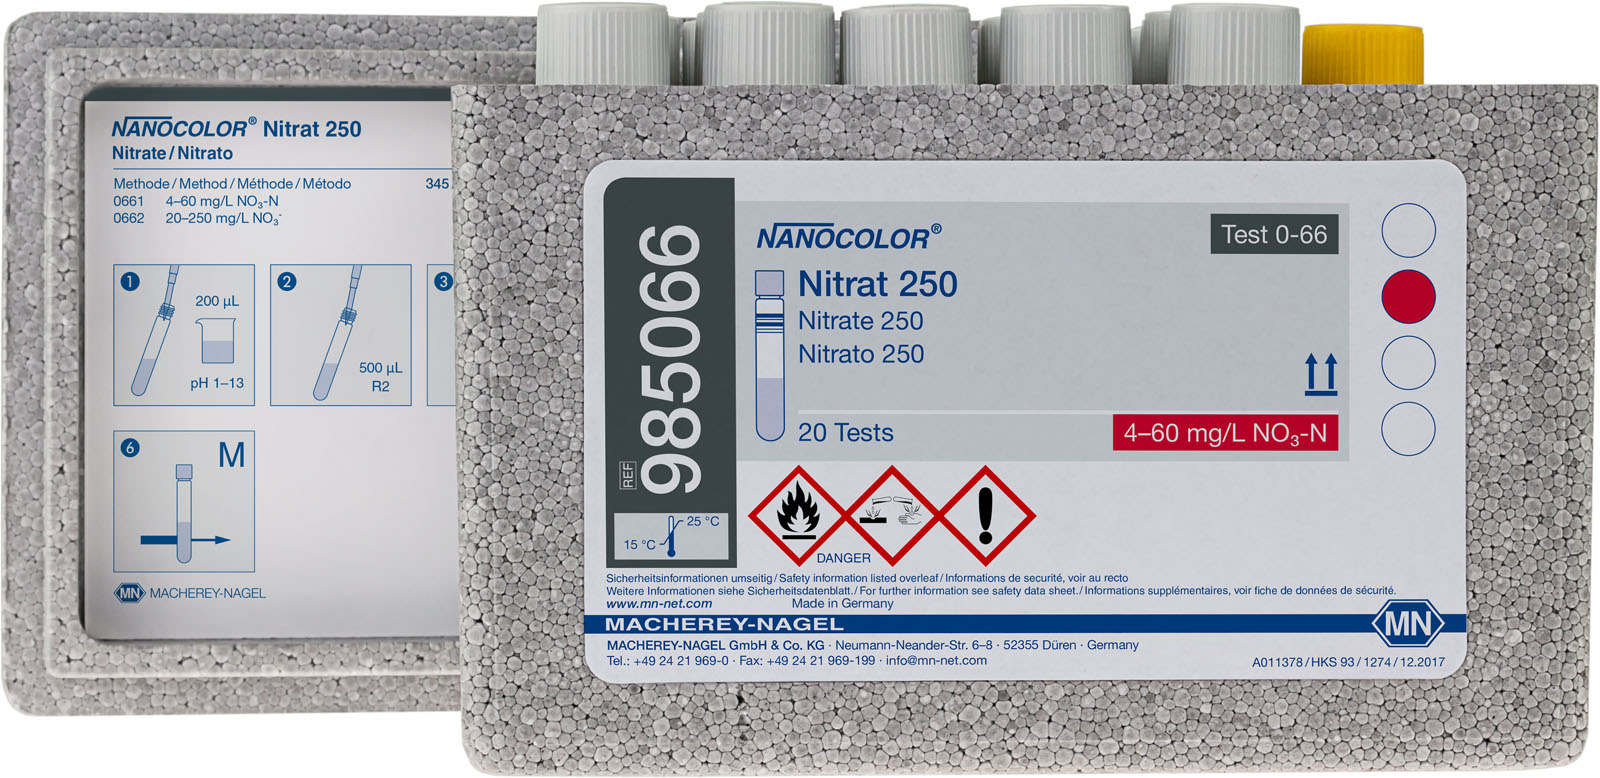 RUK NANOCOLOR- Nitrat 250 Test